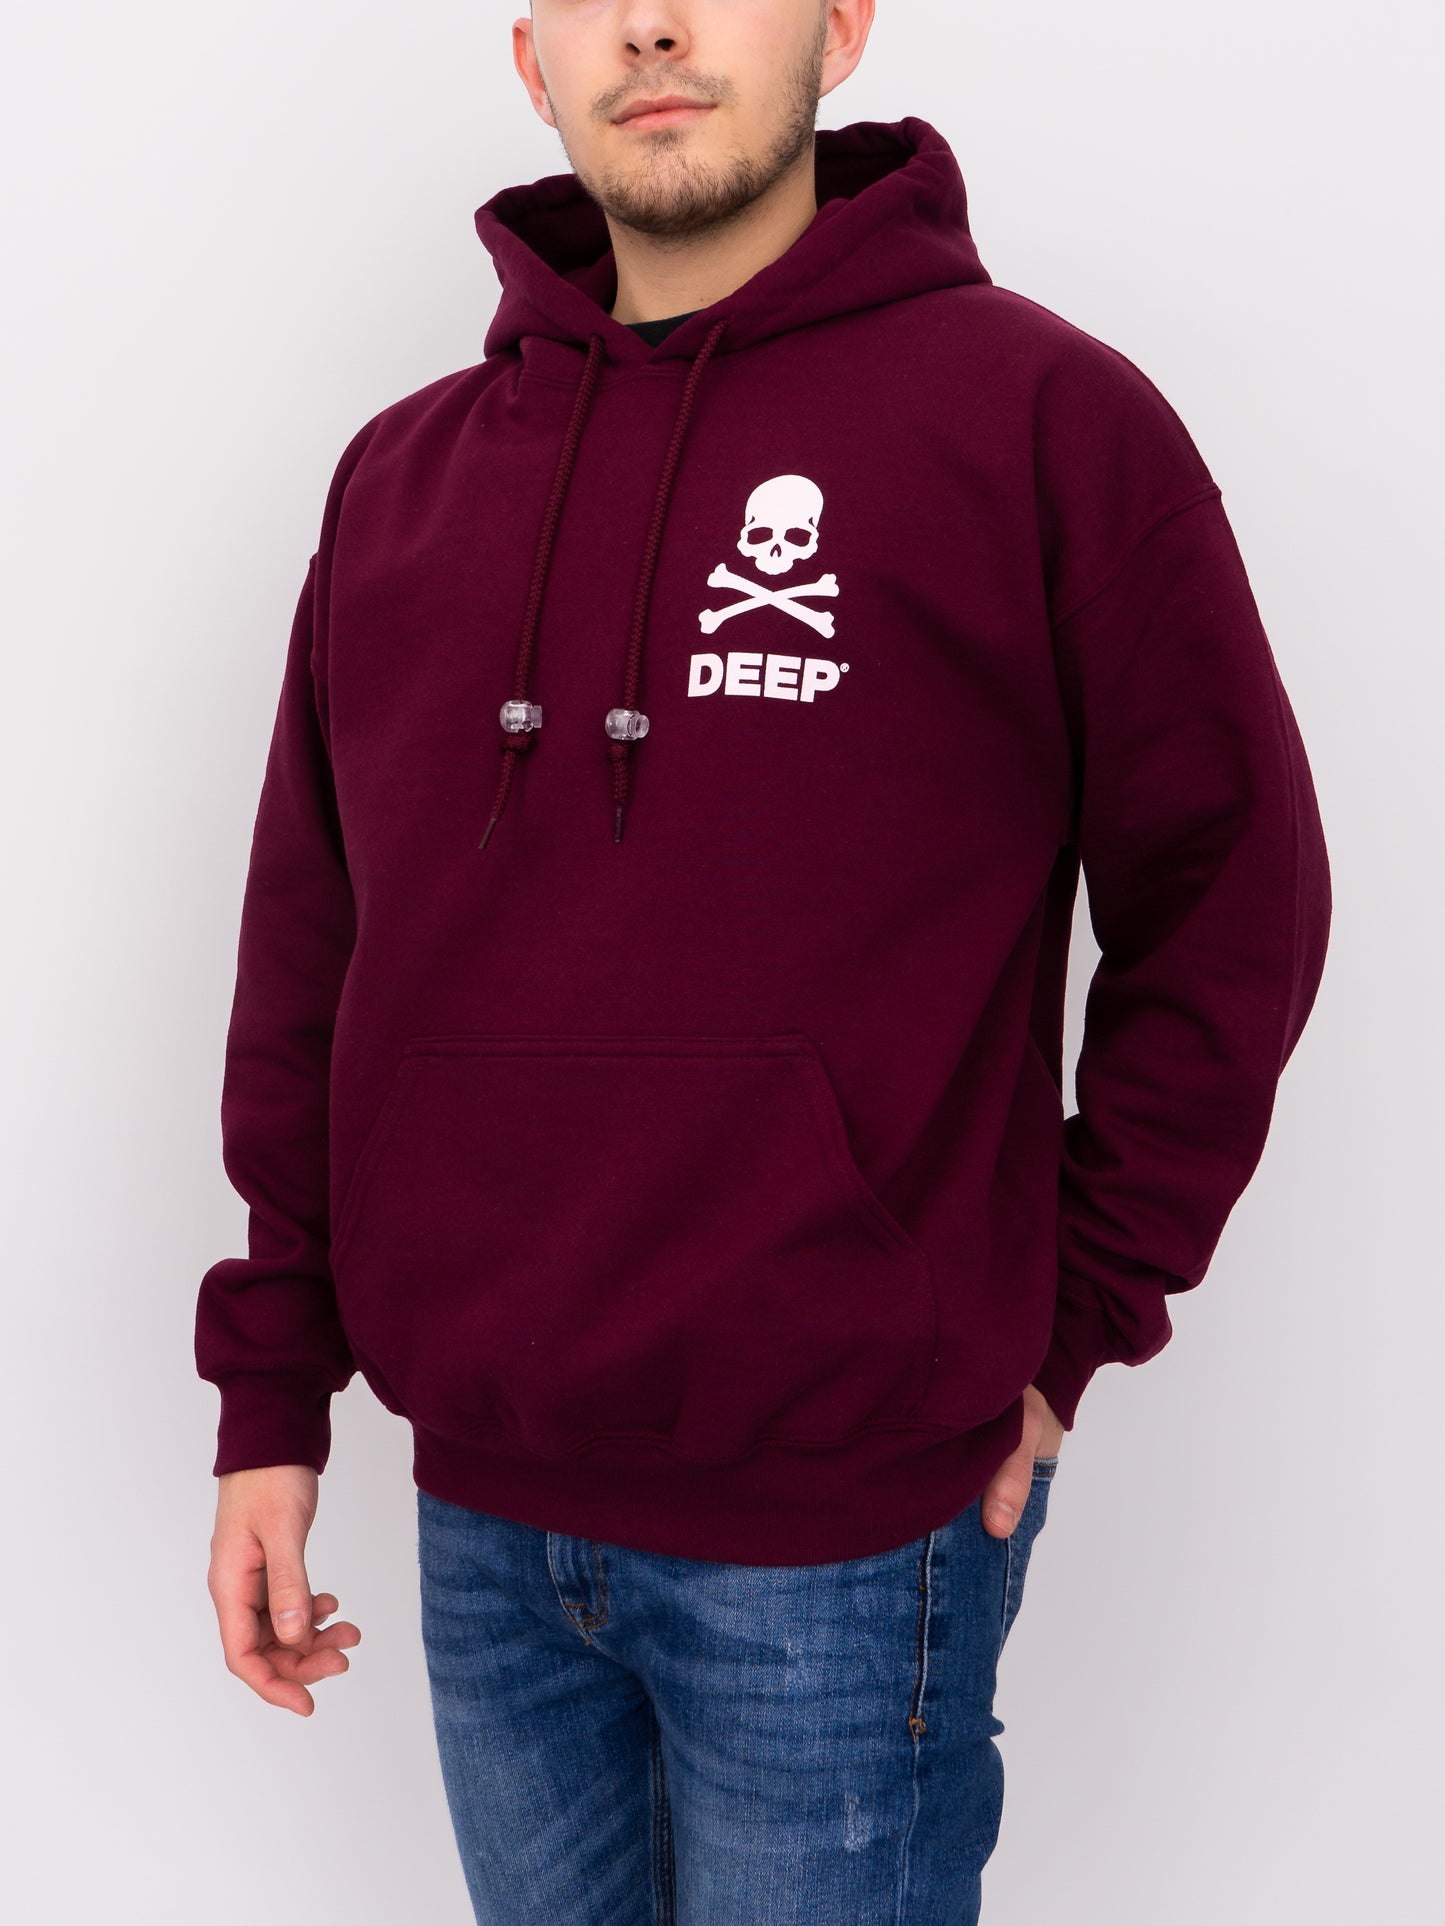 Crossbones Hooded Sweatshirt - Maroon - DEEP Clothing